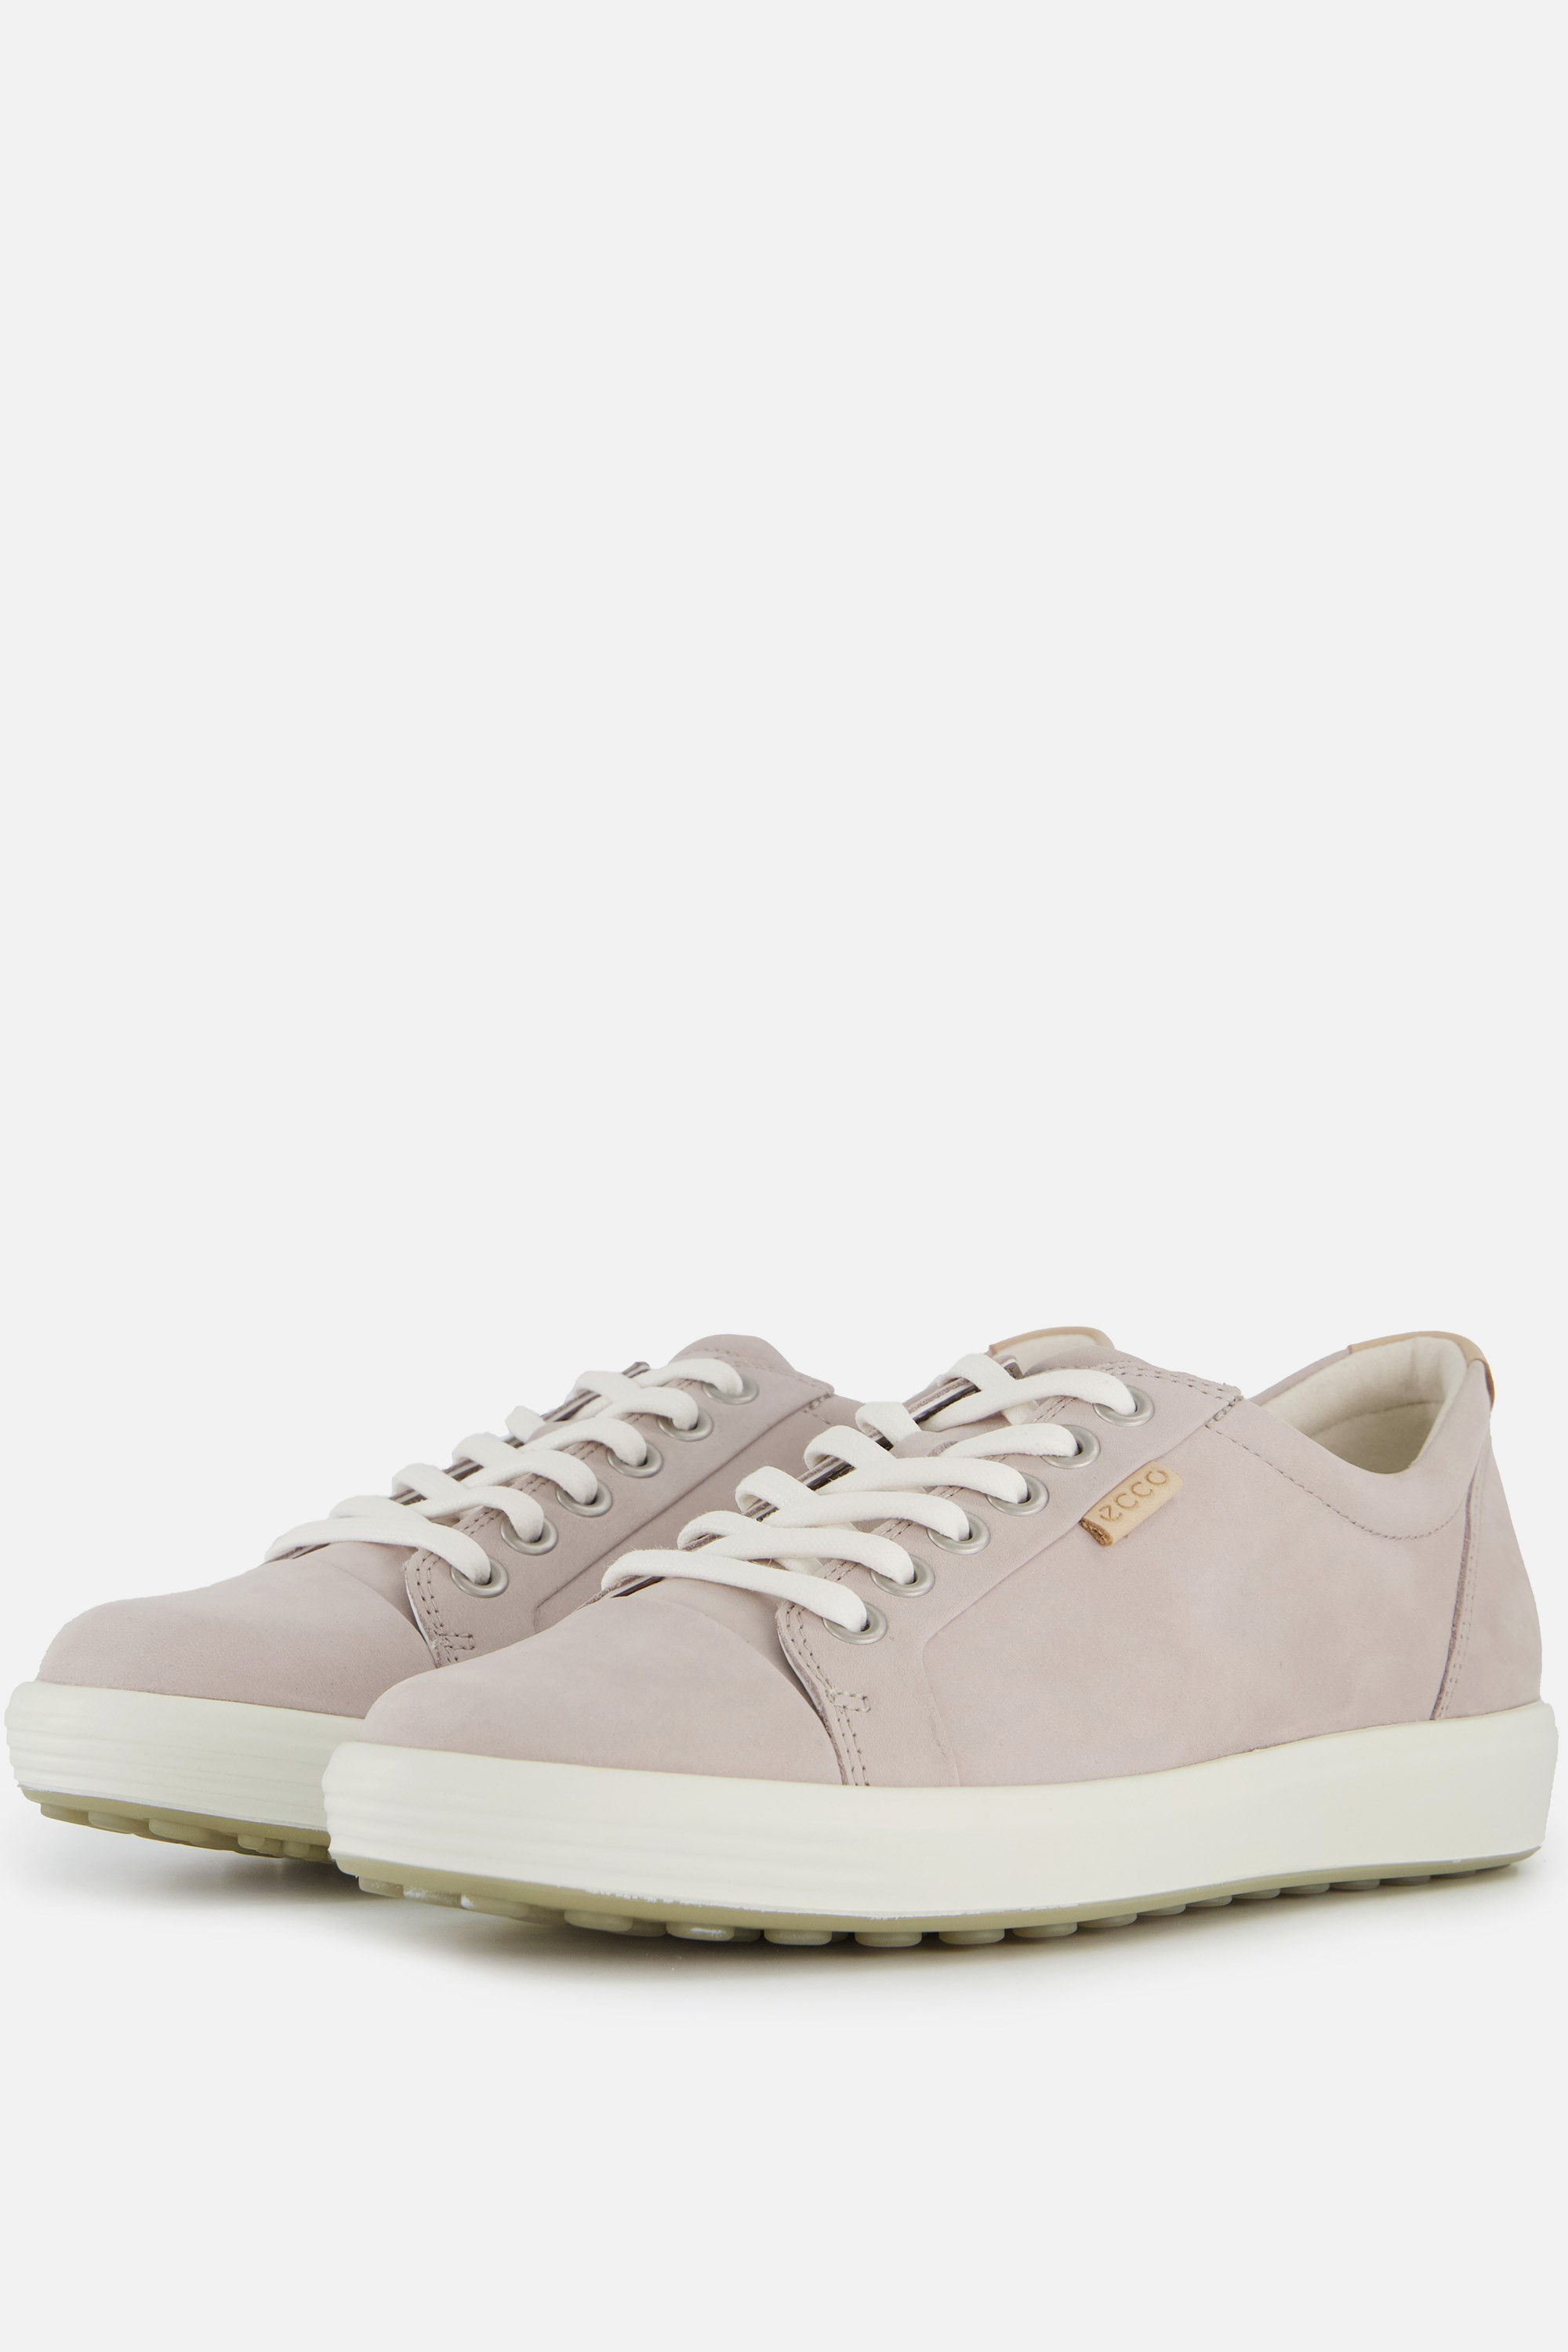 Ecco Ecco Soft 7 W Sneakers roze Nubuck